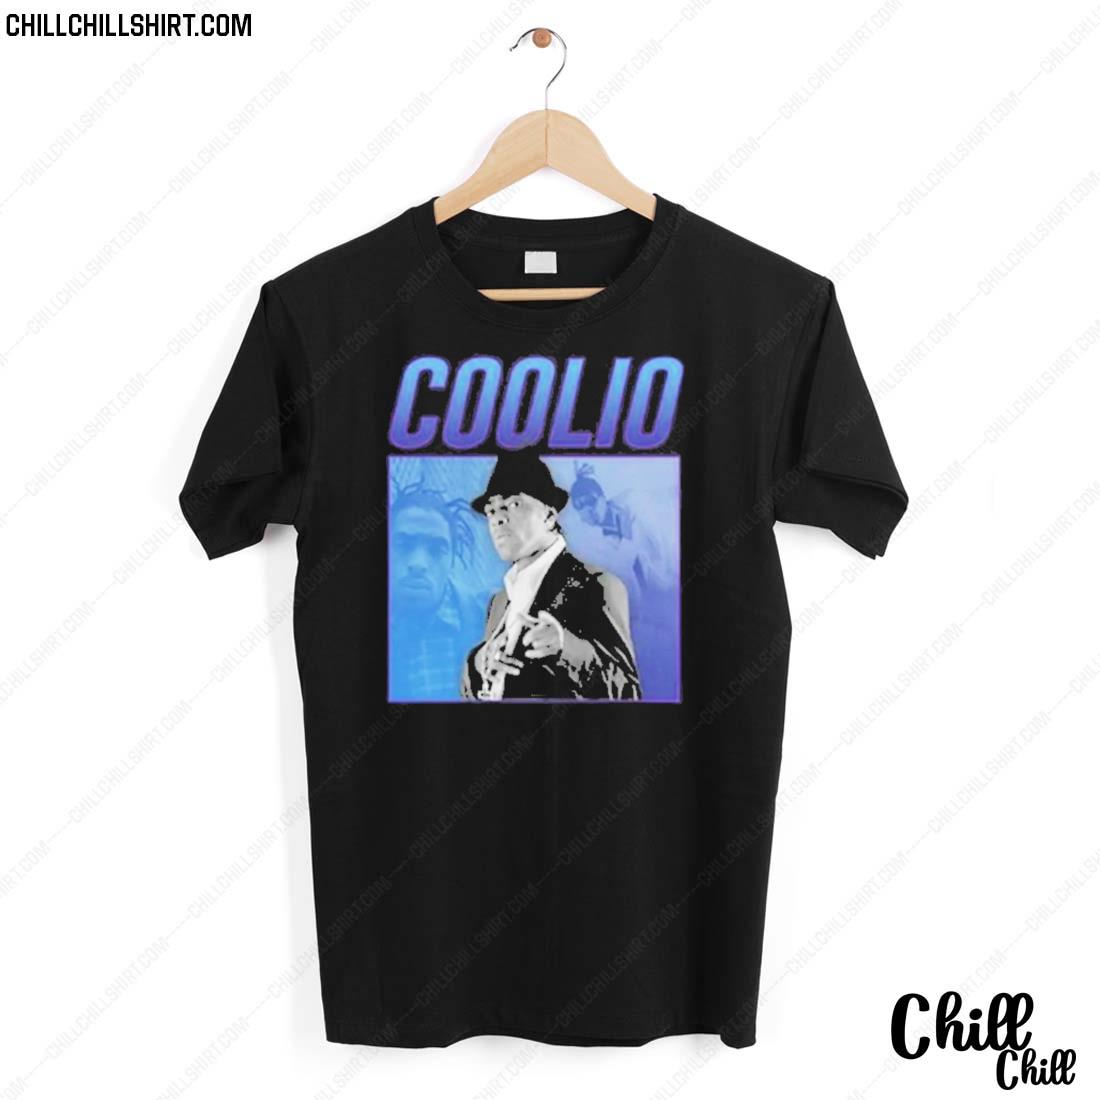 Nice rip Coolio 1963-2022 T-shirt